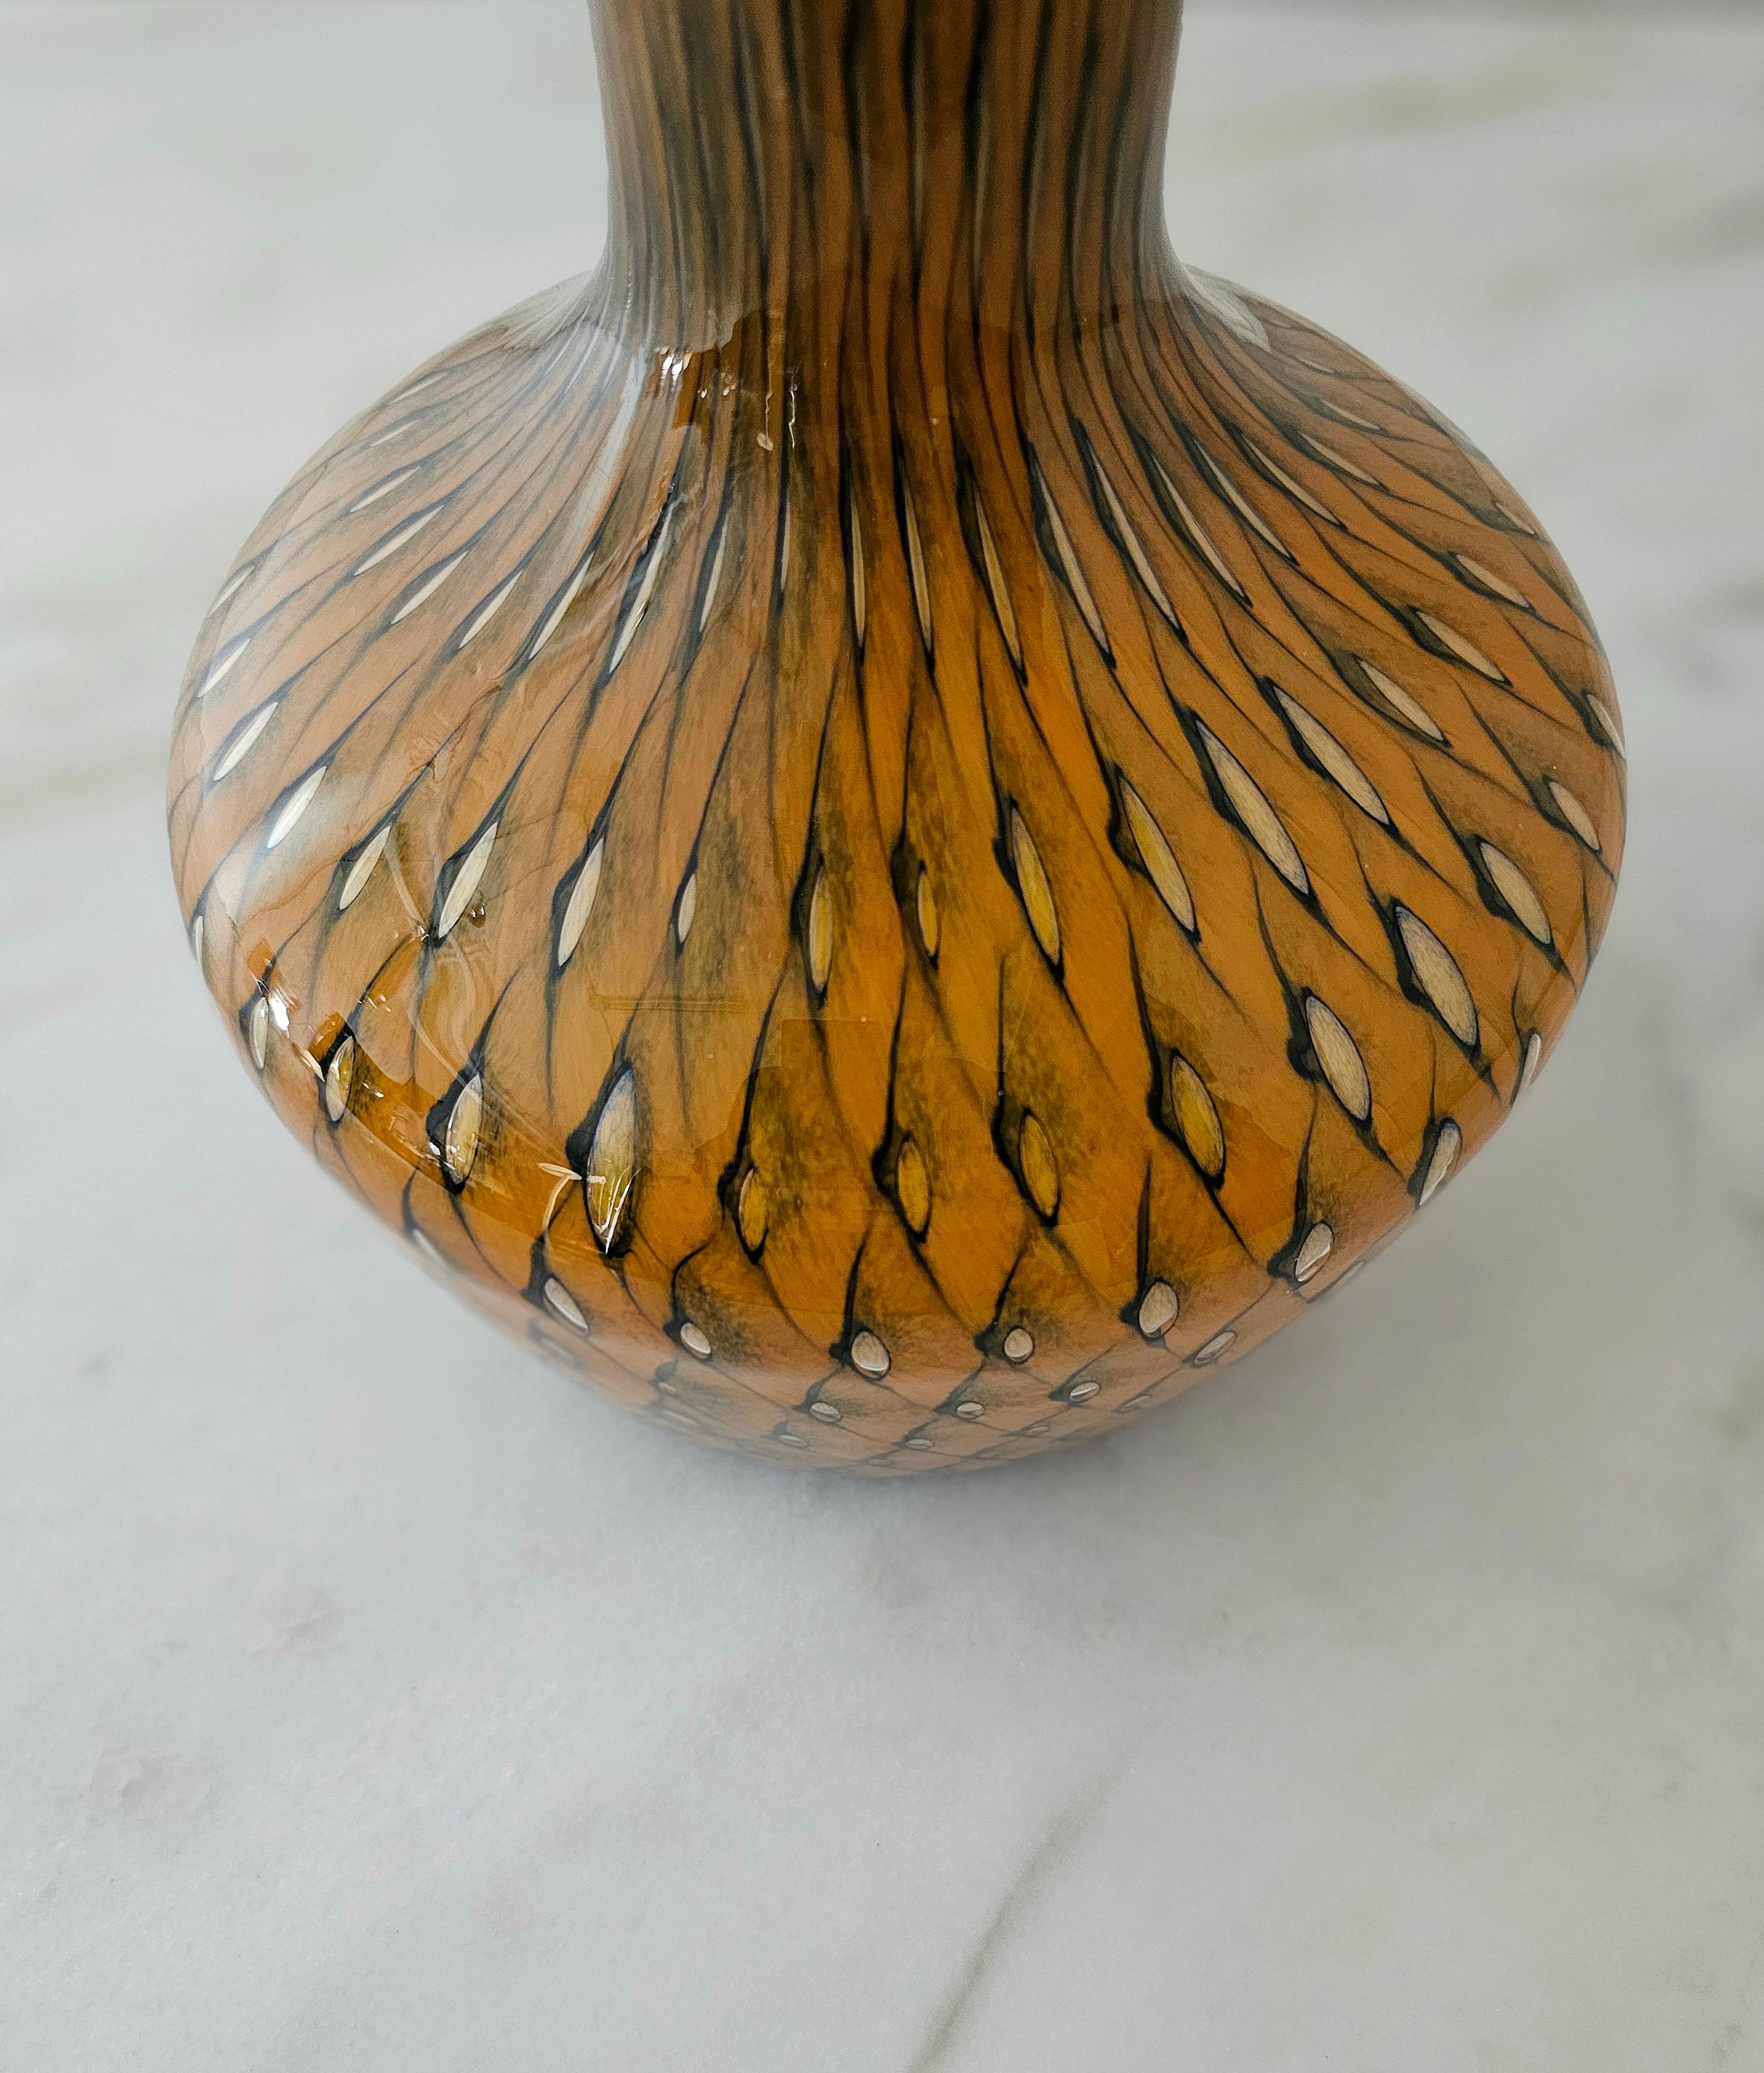 Vase Decorative Object Murano Glass Decorated Midcentury Italian Design 1970s For Sale 2